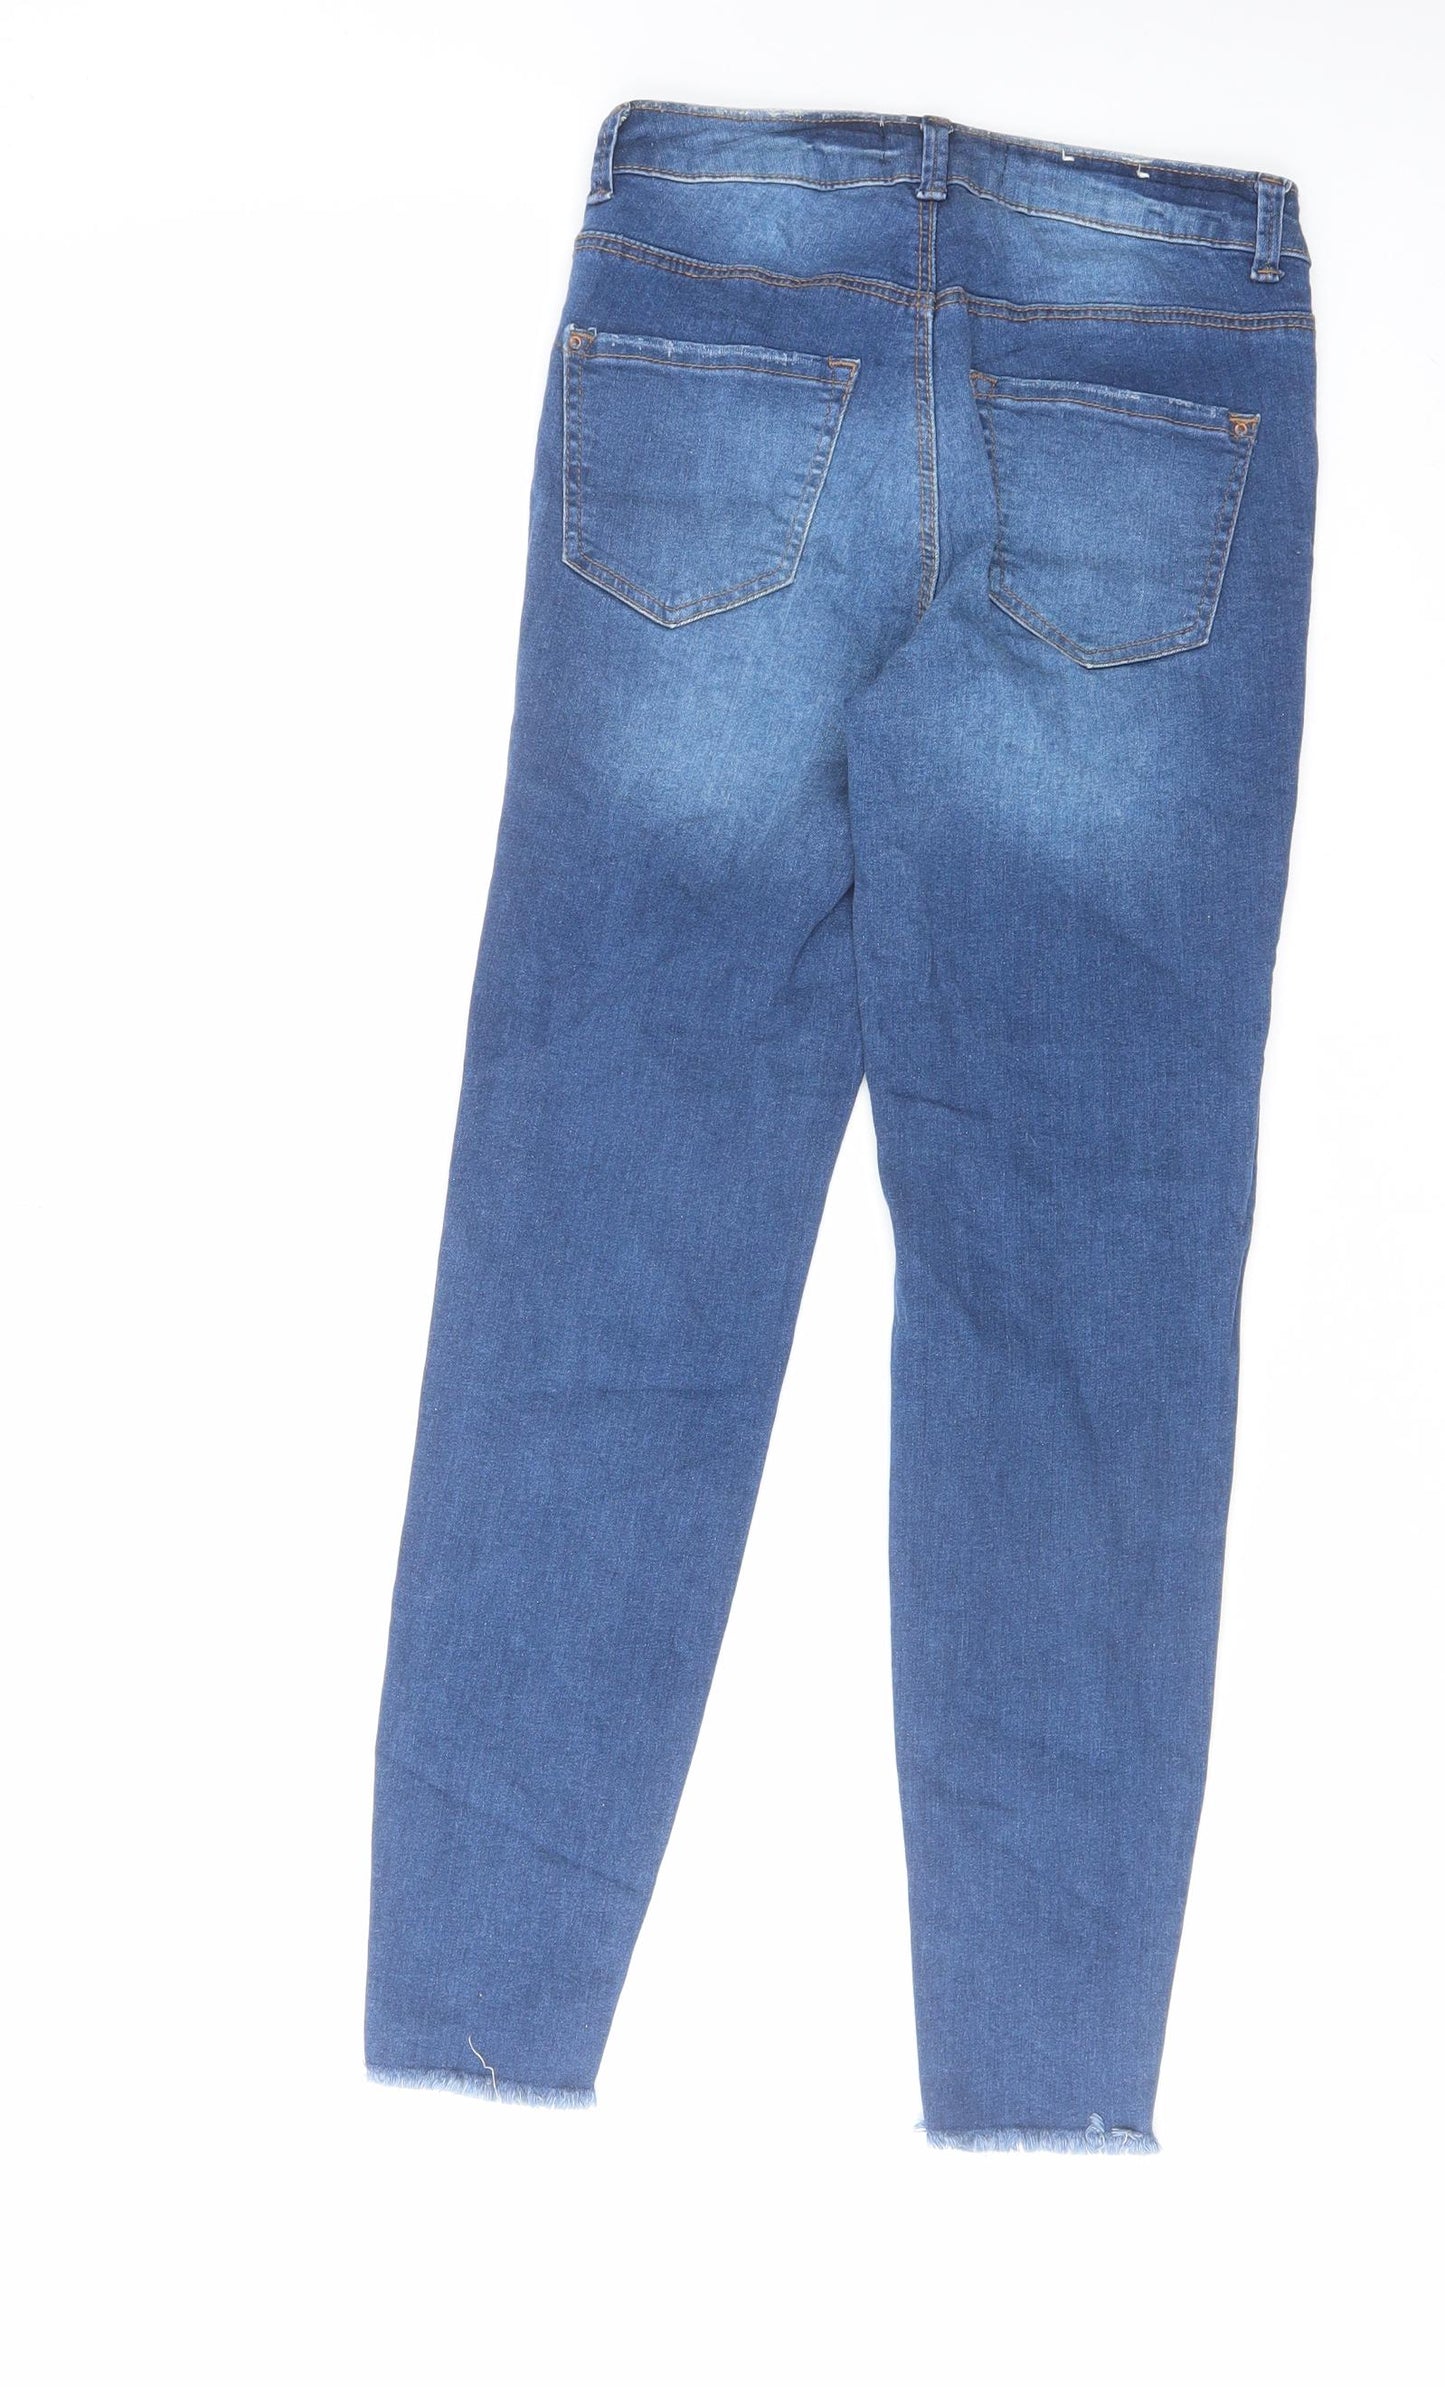 New Look Womens Blue Cotton Skinny Jeans Size 8 L25 in Regular Zip - Raw Hem